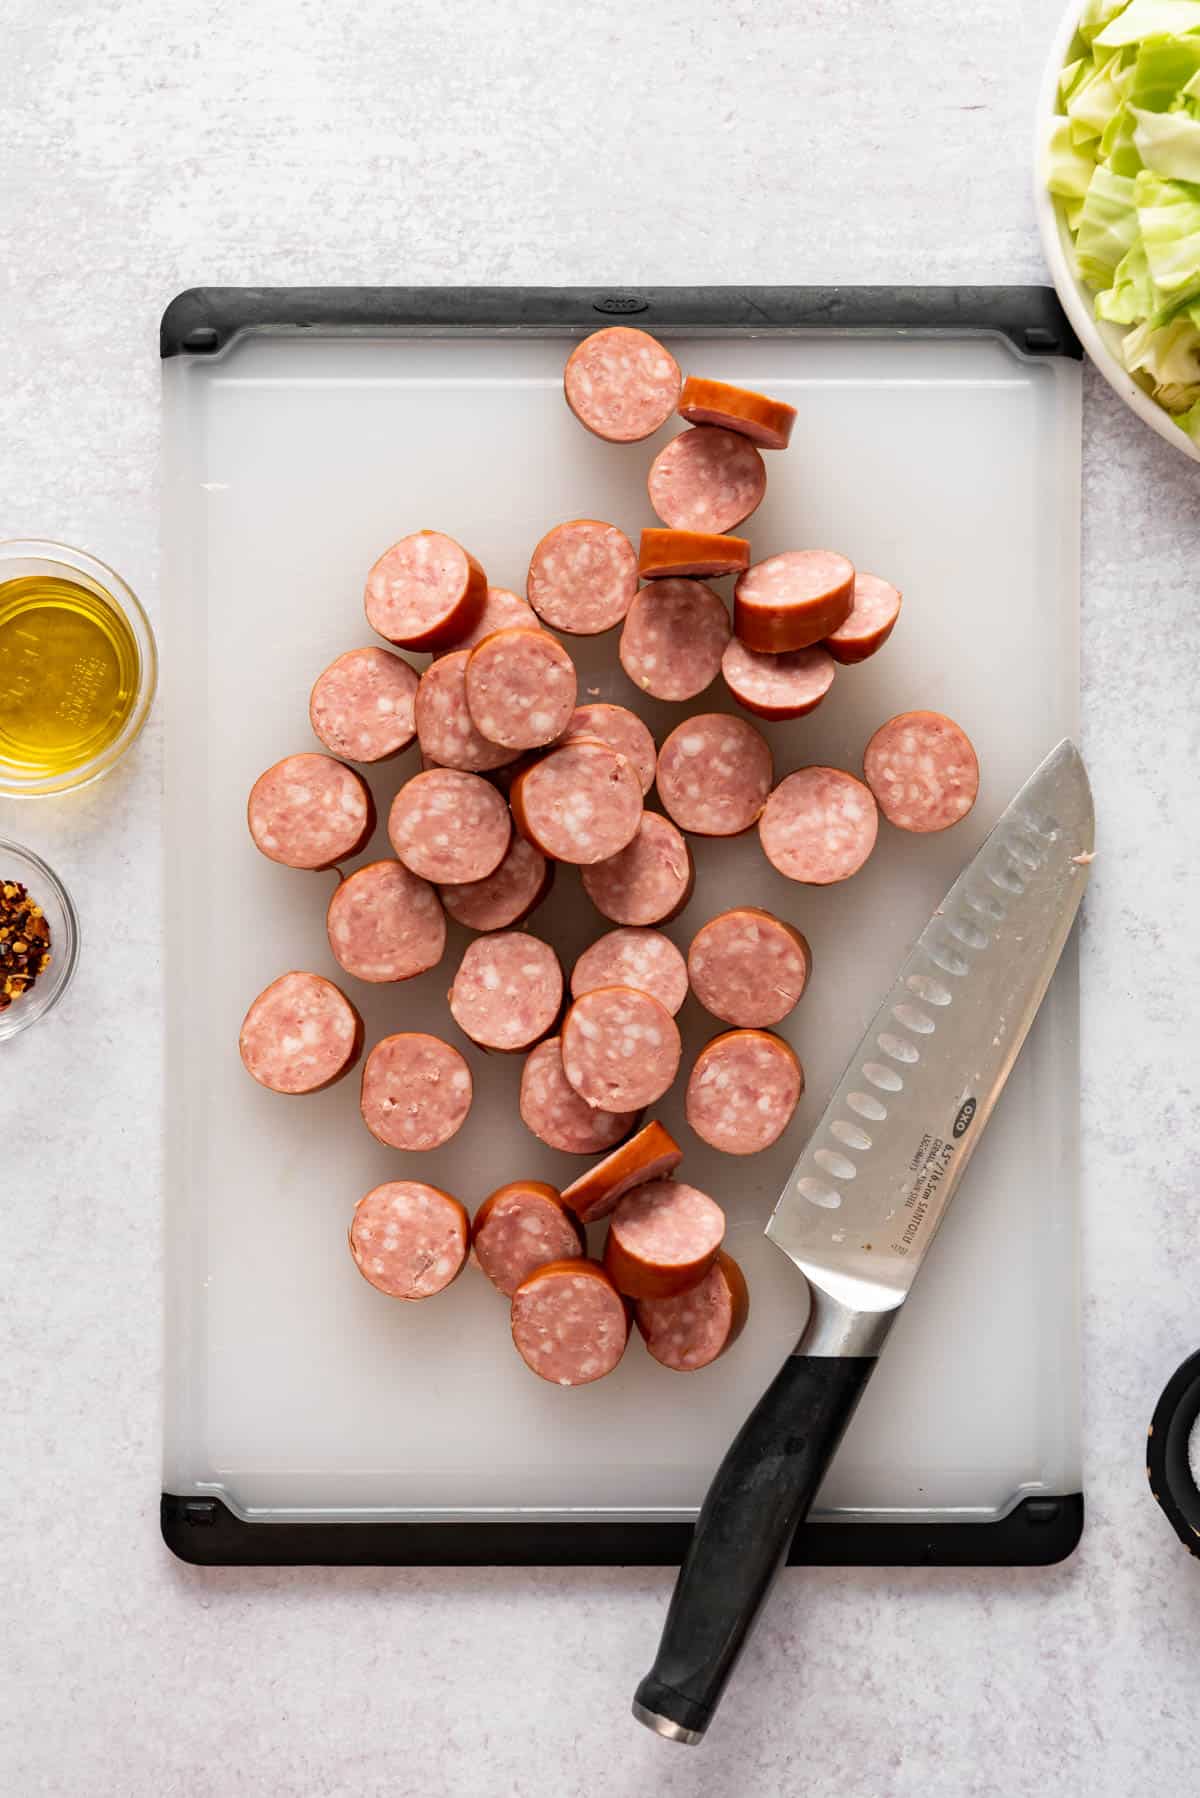 Sliced polska kielbasa sausage on a cutting board with a knife.